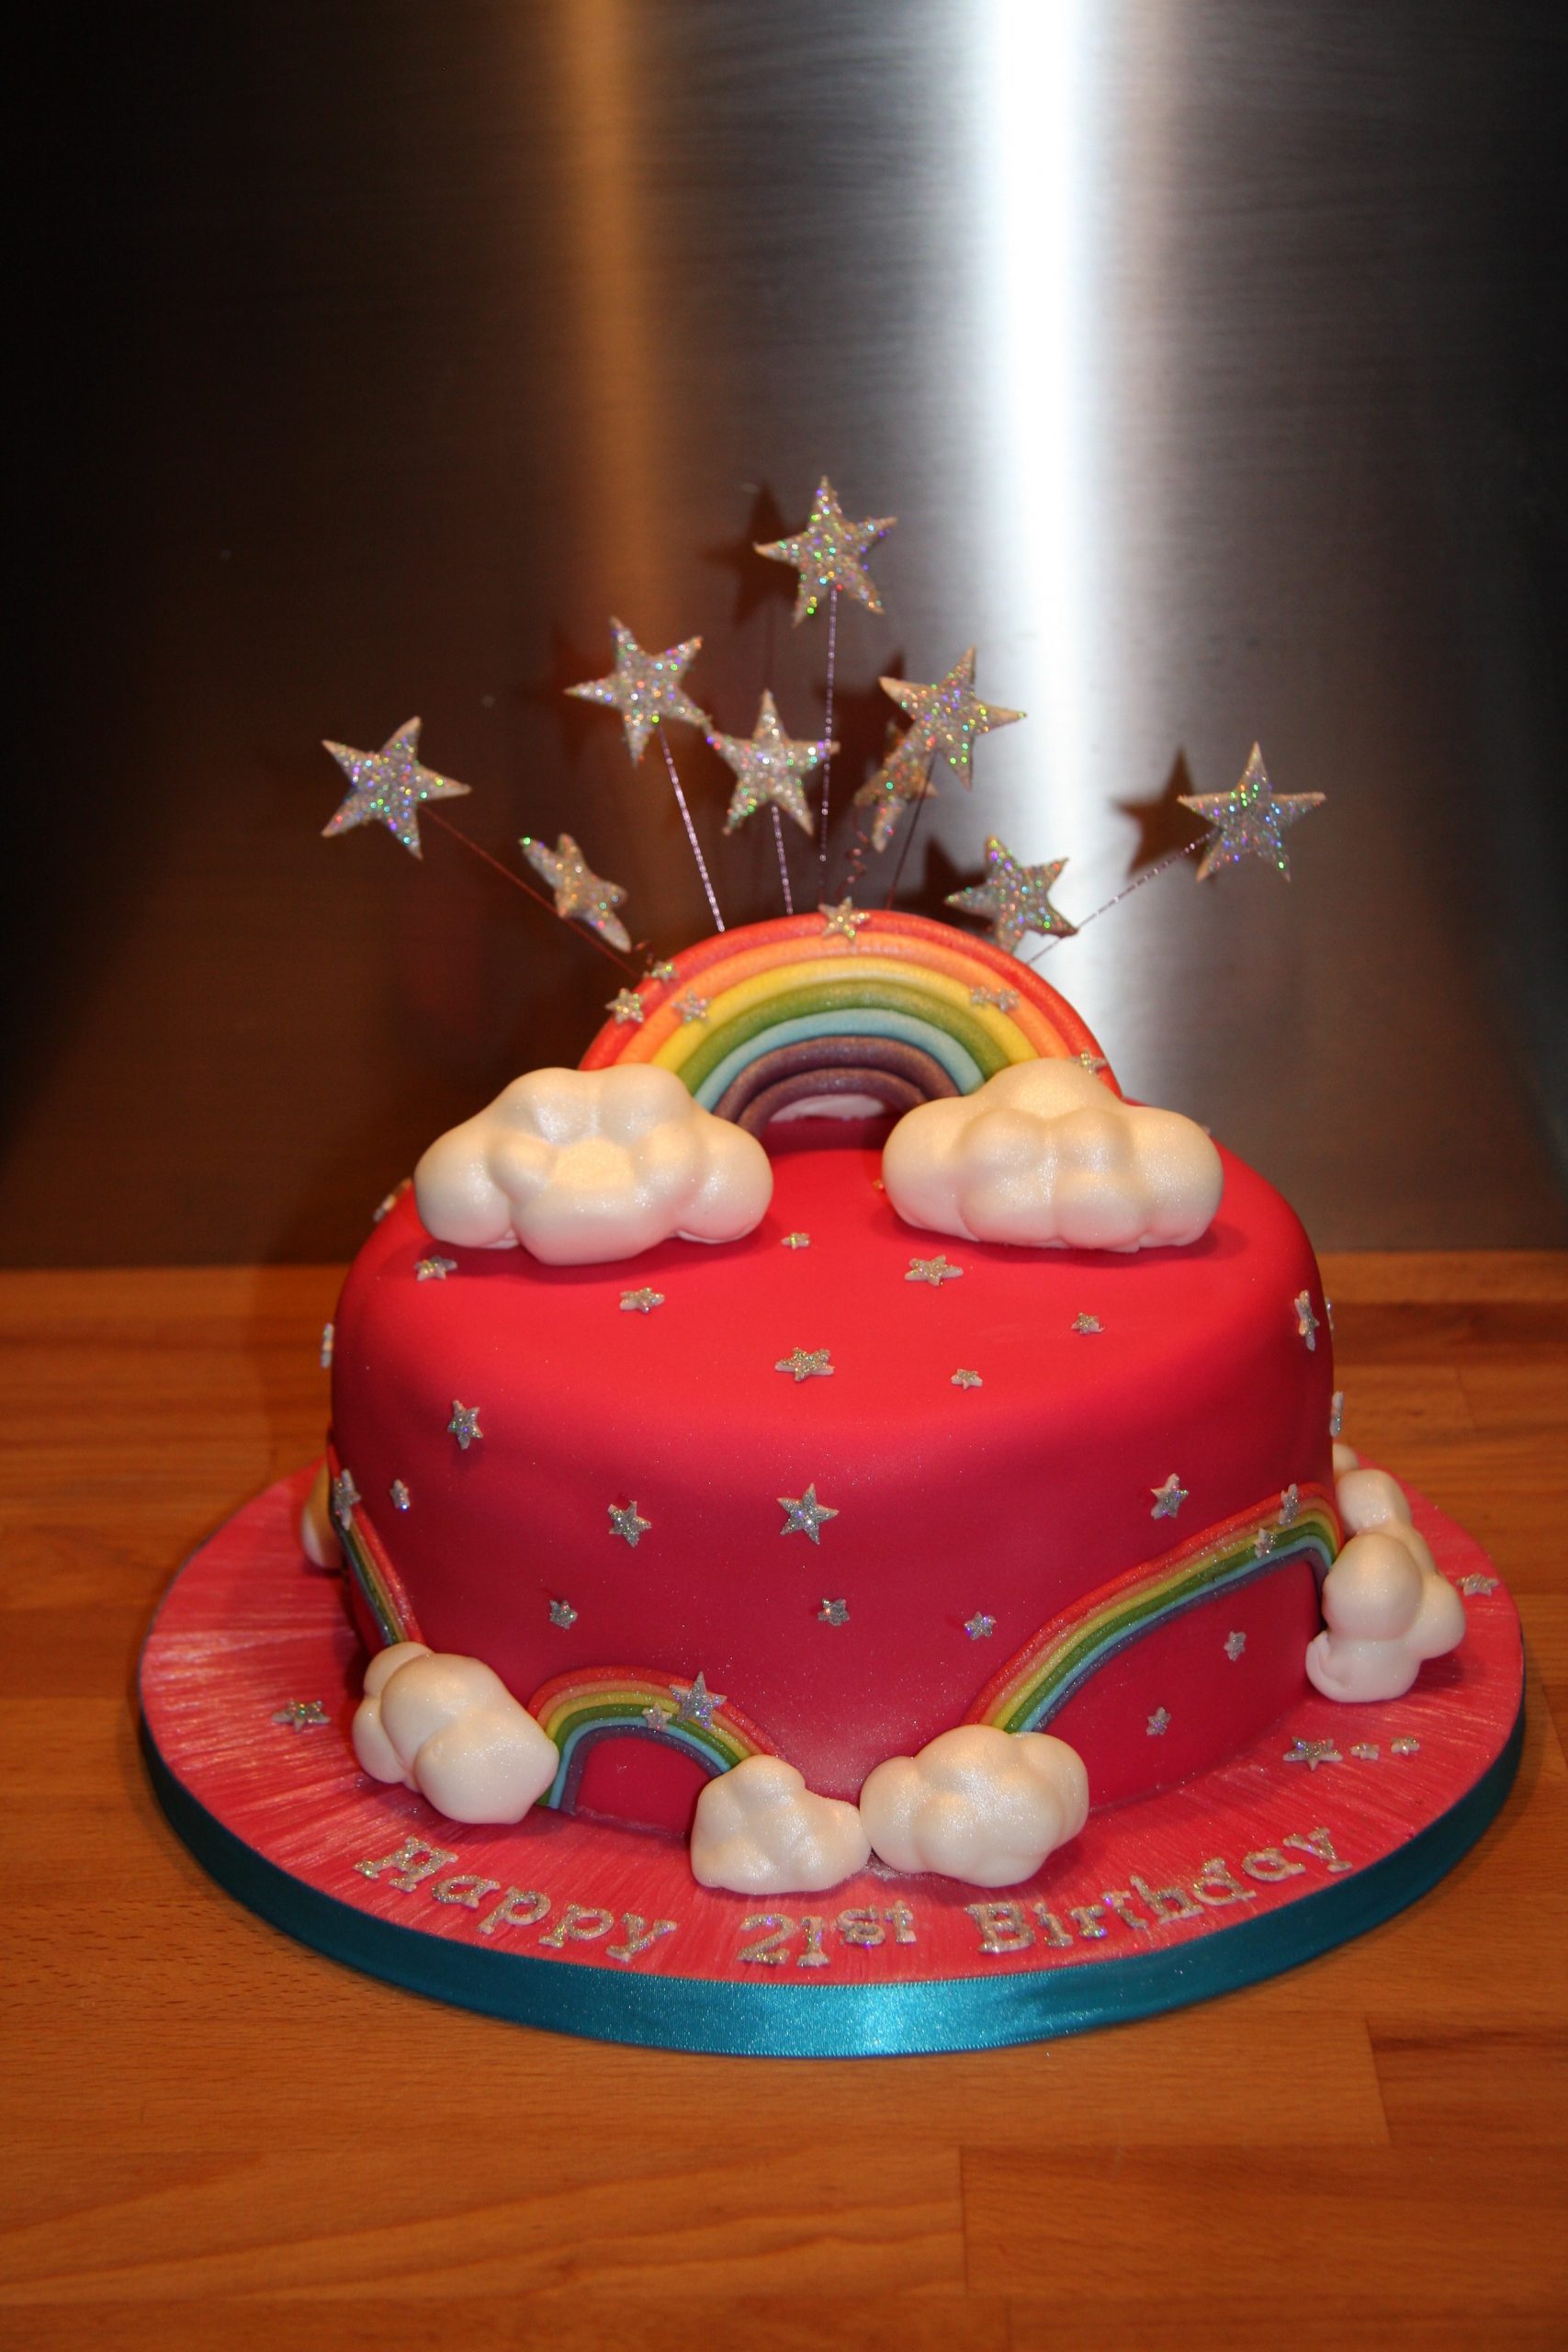 Pink sparkly rainbow cake